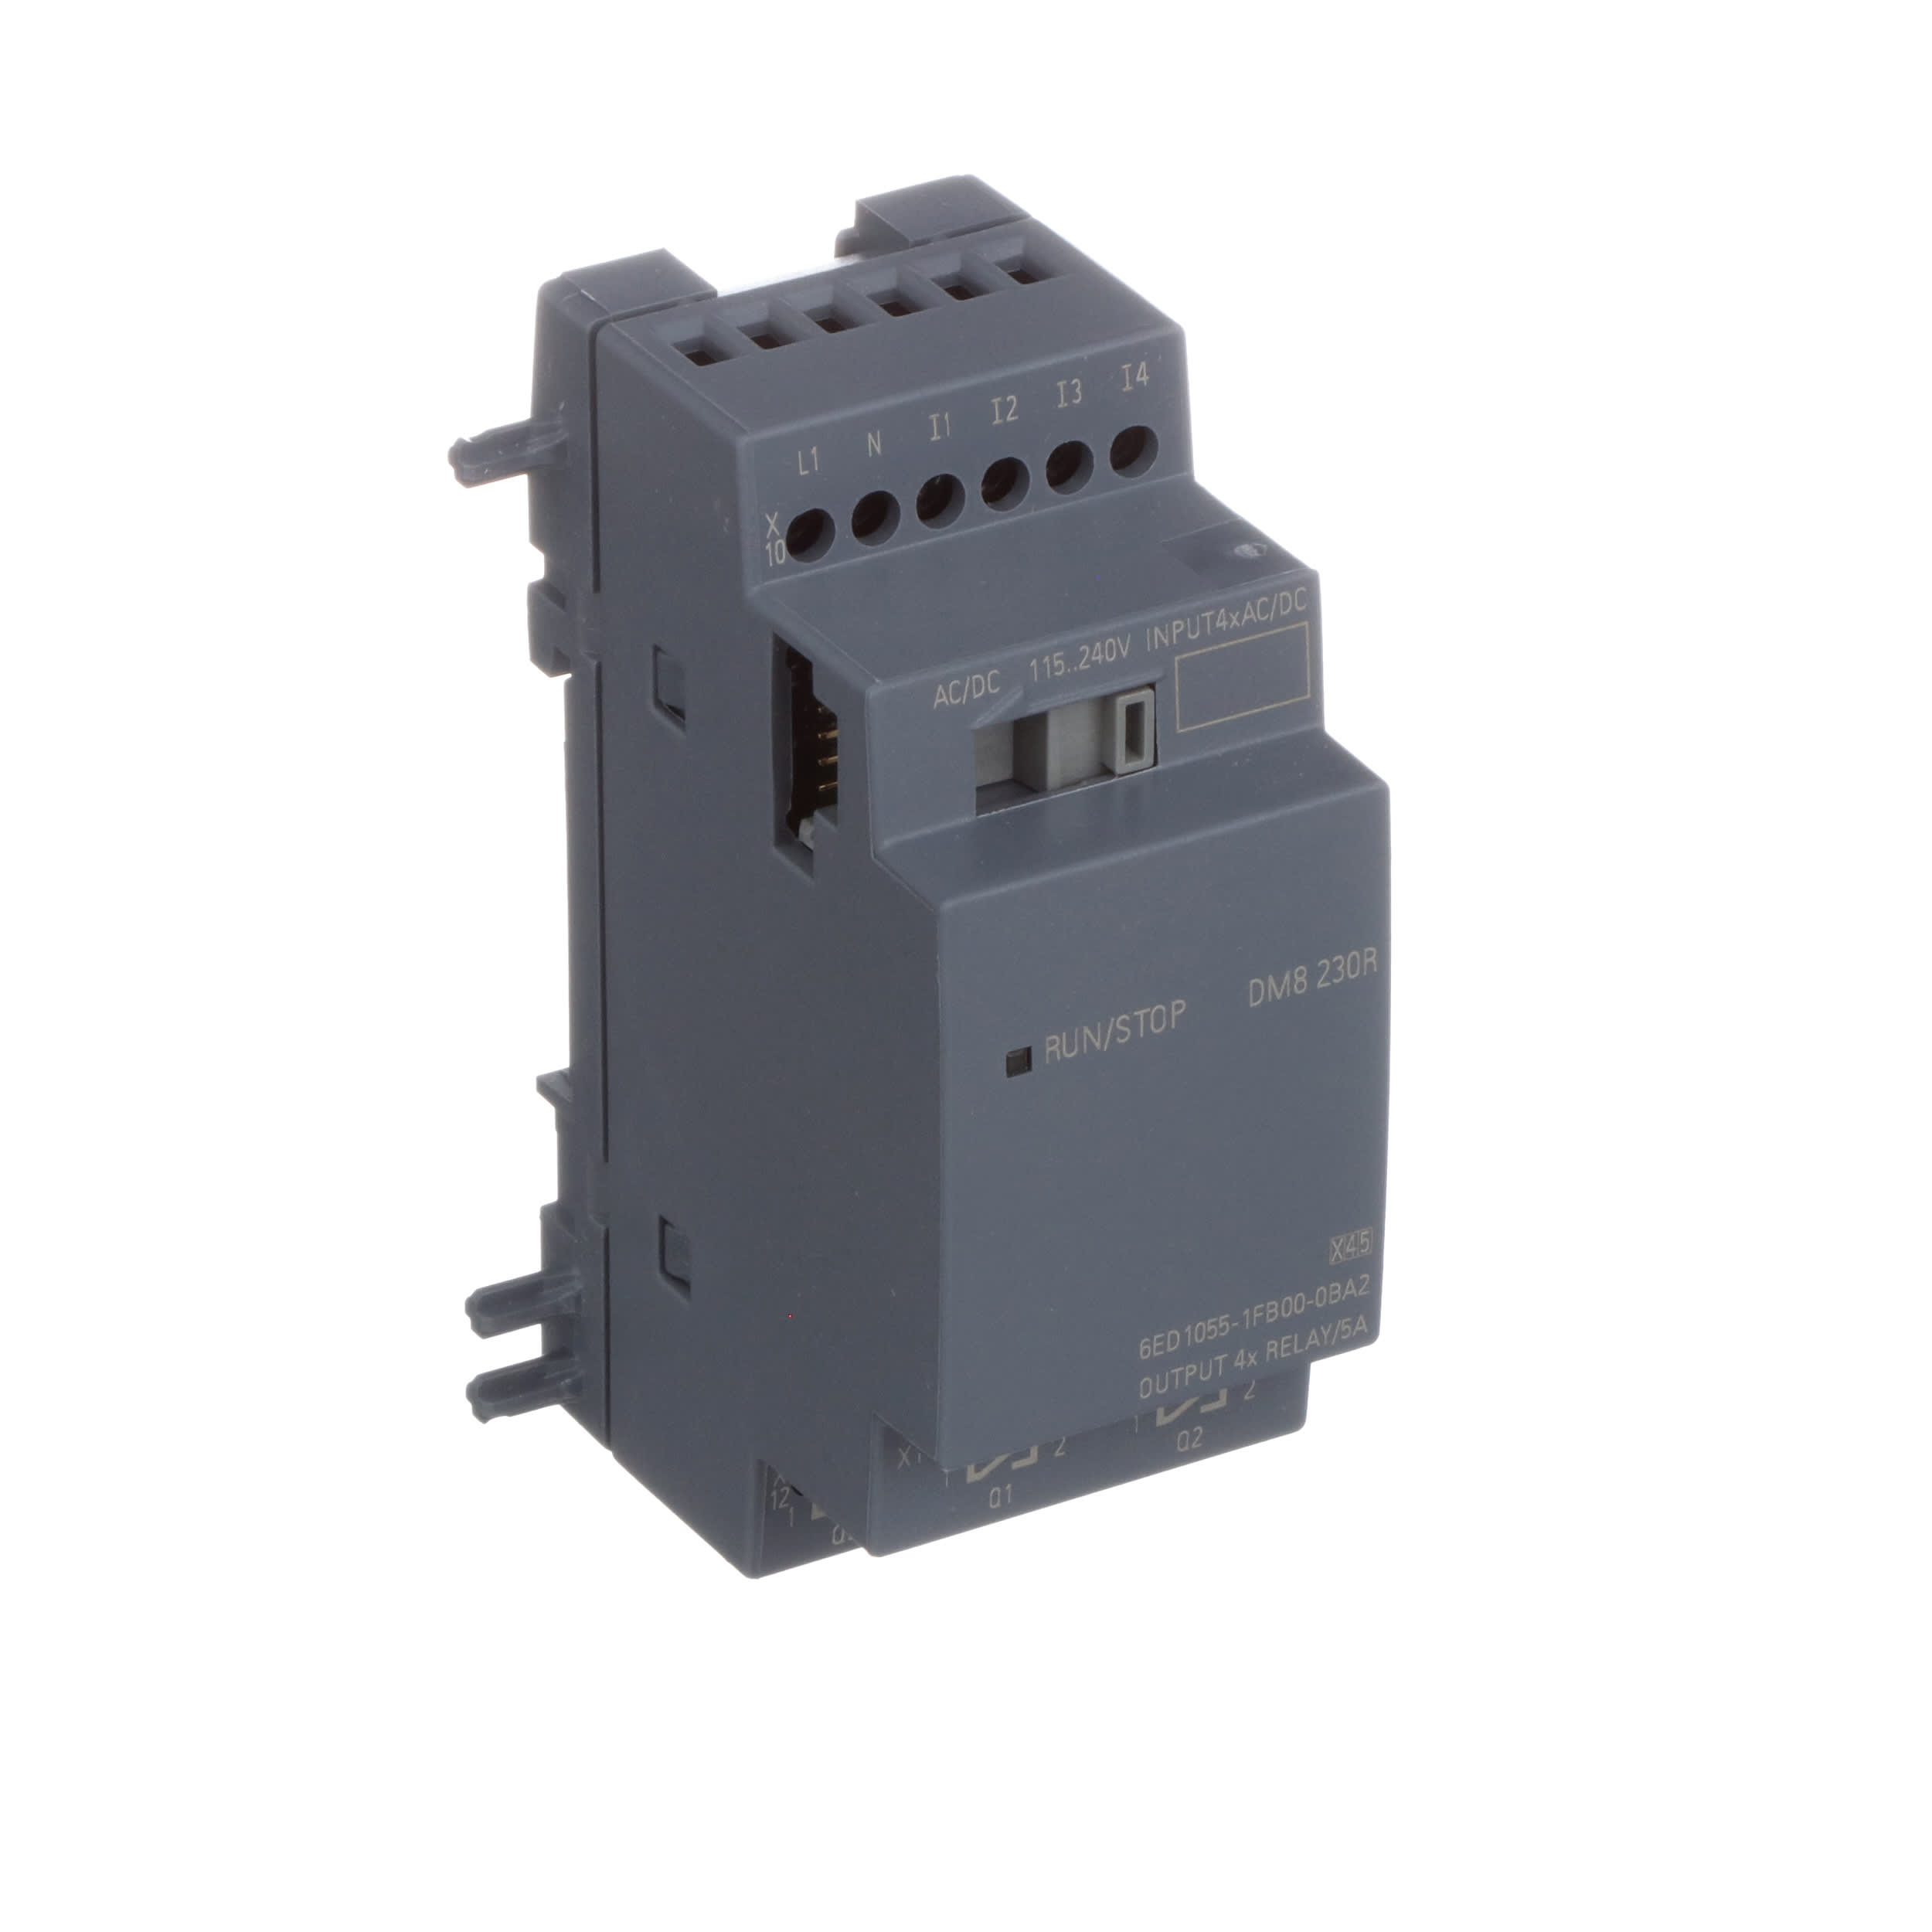 Siemens 6ED1055-1FB00-0BA1 Interface Module for sale online